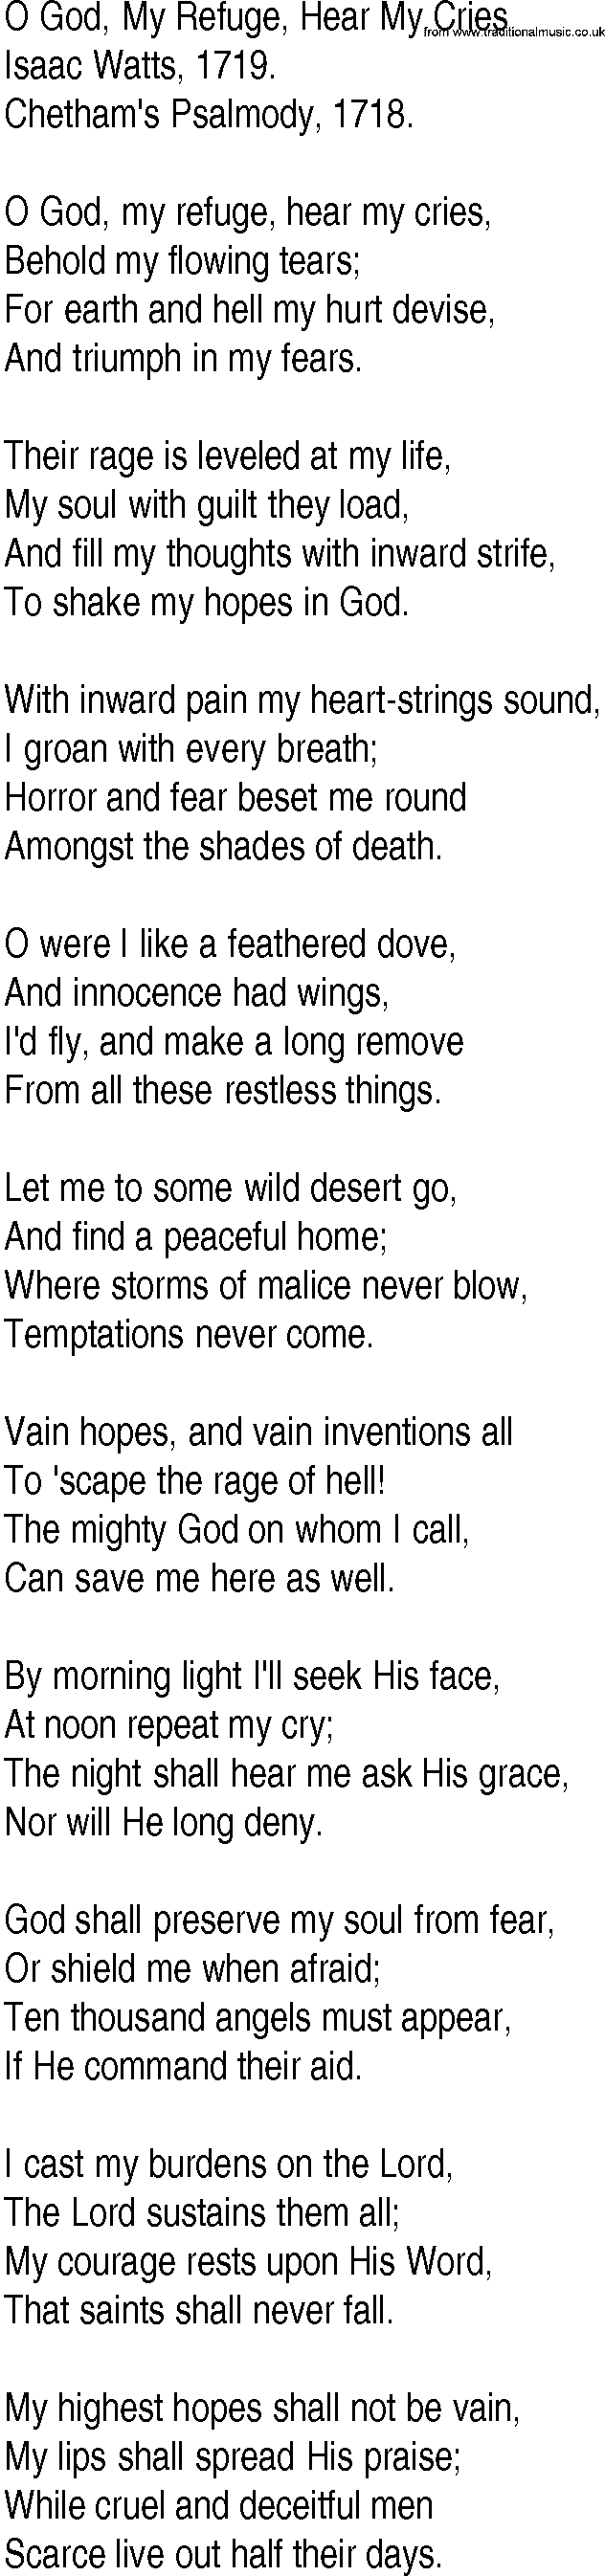 Hymn and Gospel Song: O God, My Refuge, Hear My Cries by Isaac Watts lyrics